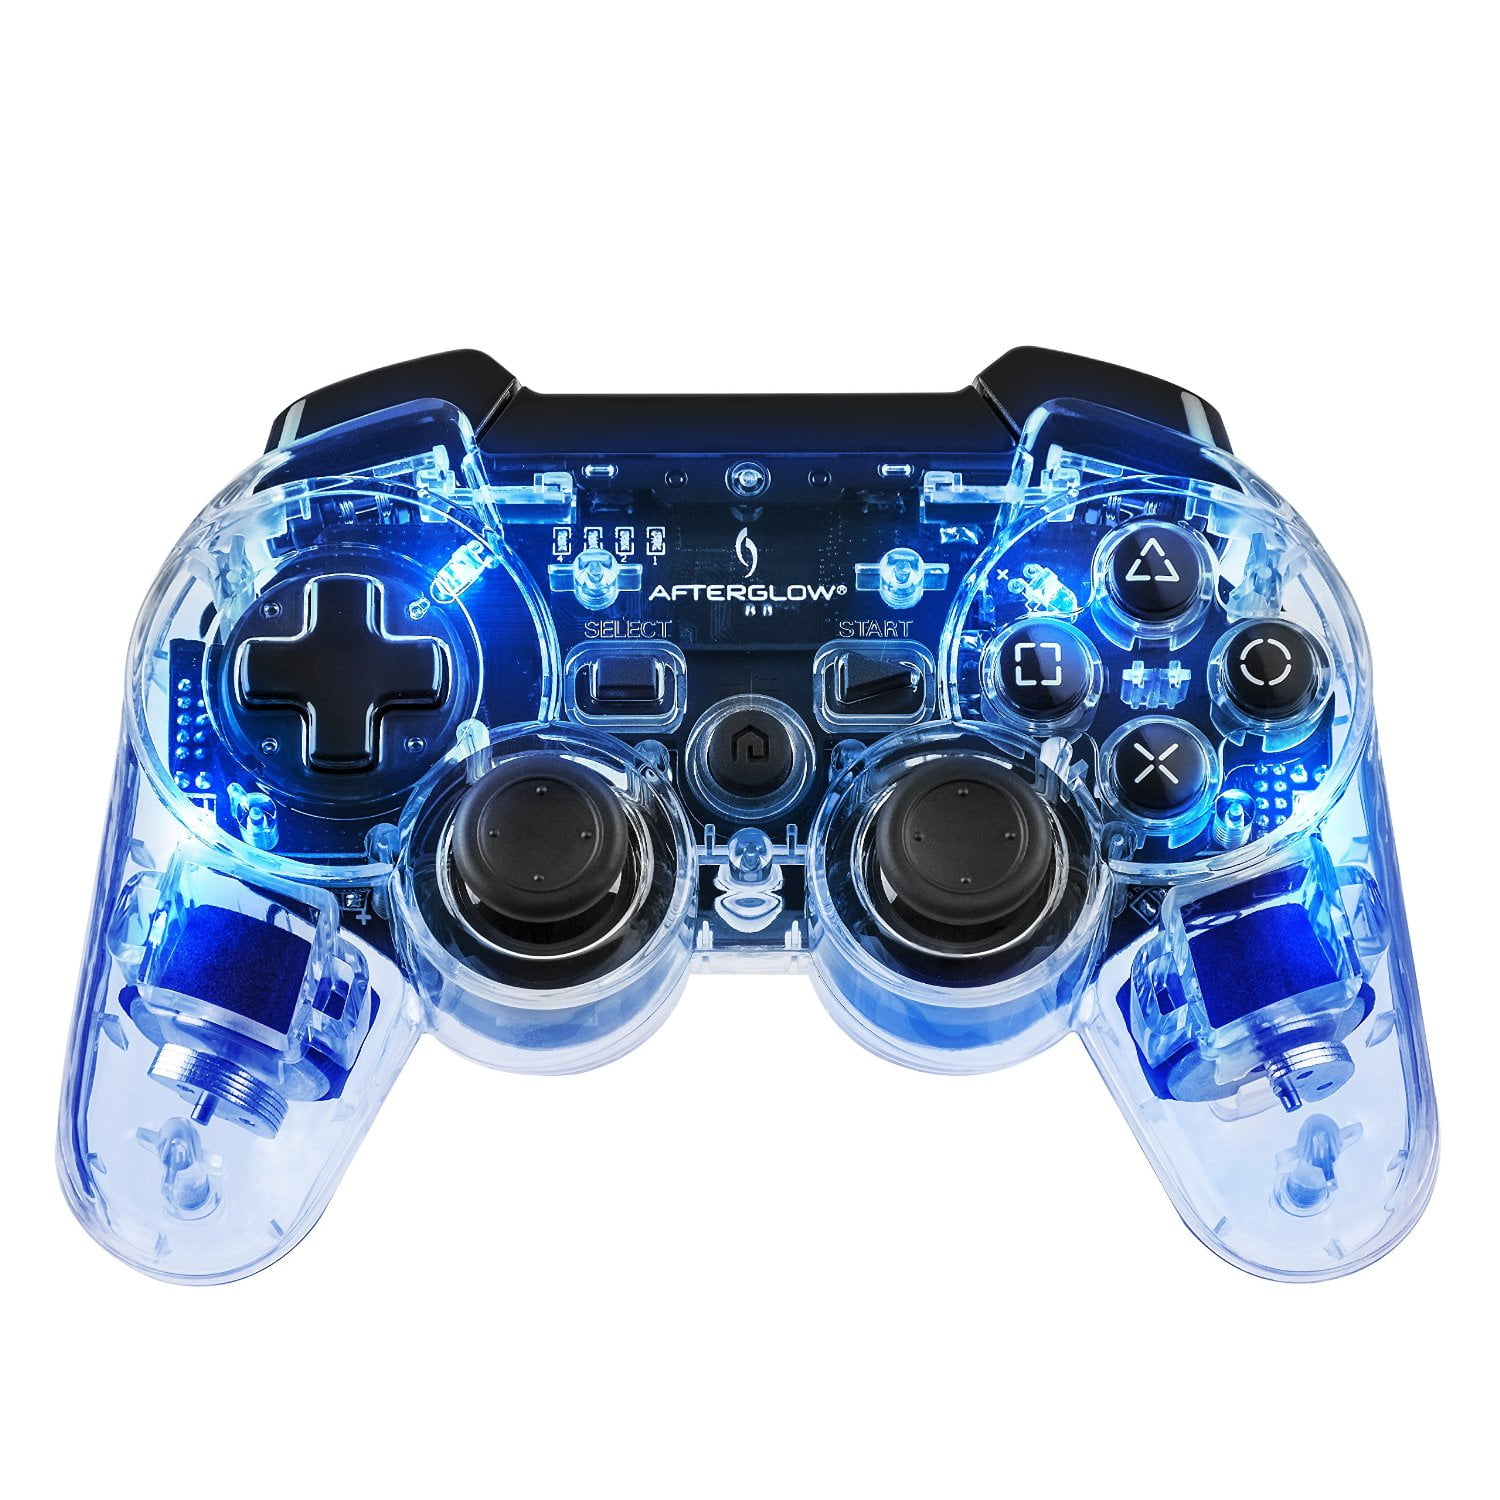 Afterglow Controller: Signature Blue - PS3, PC - Walmart.com